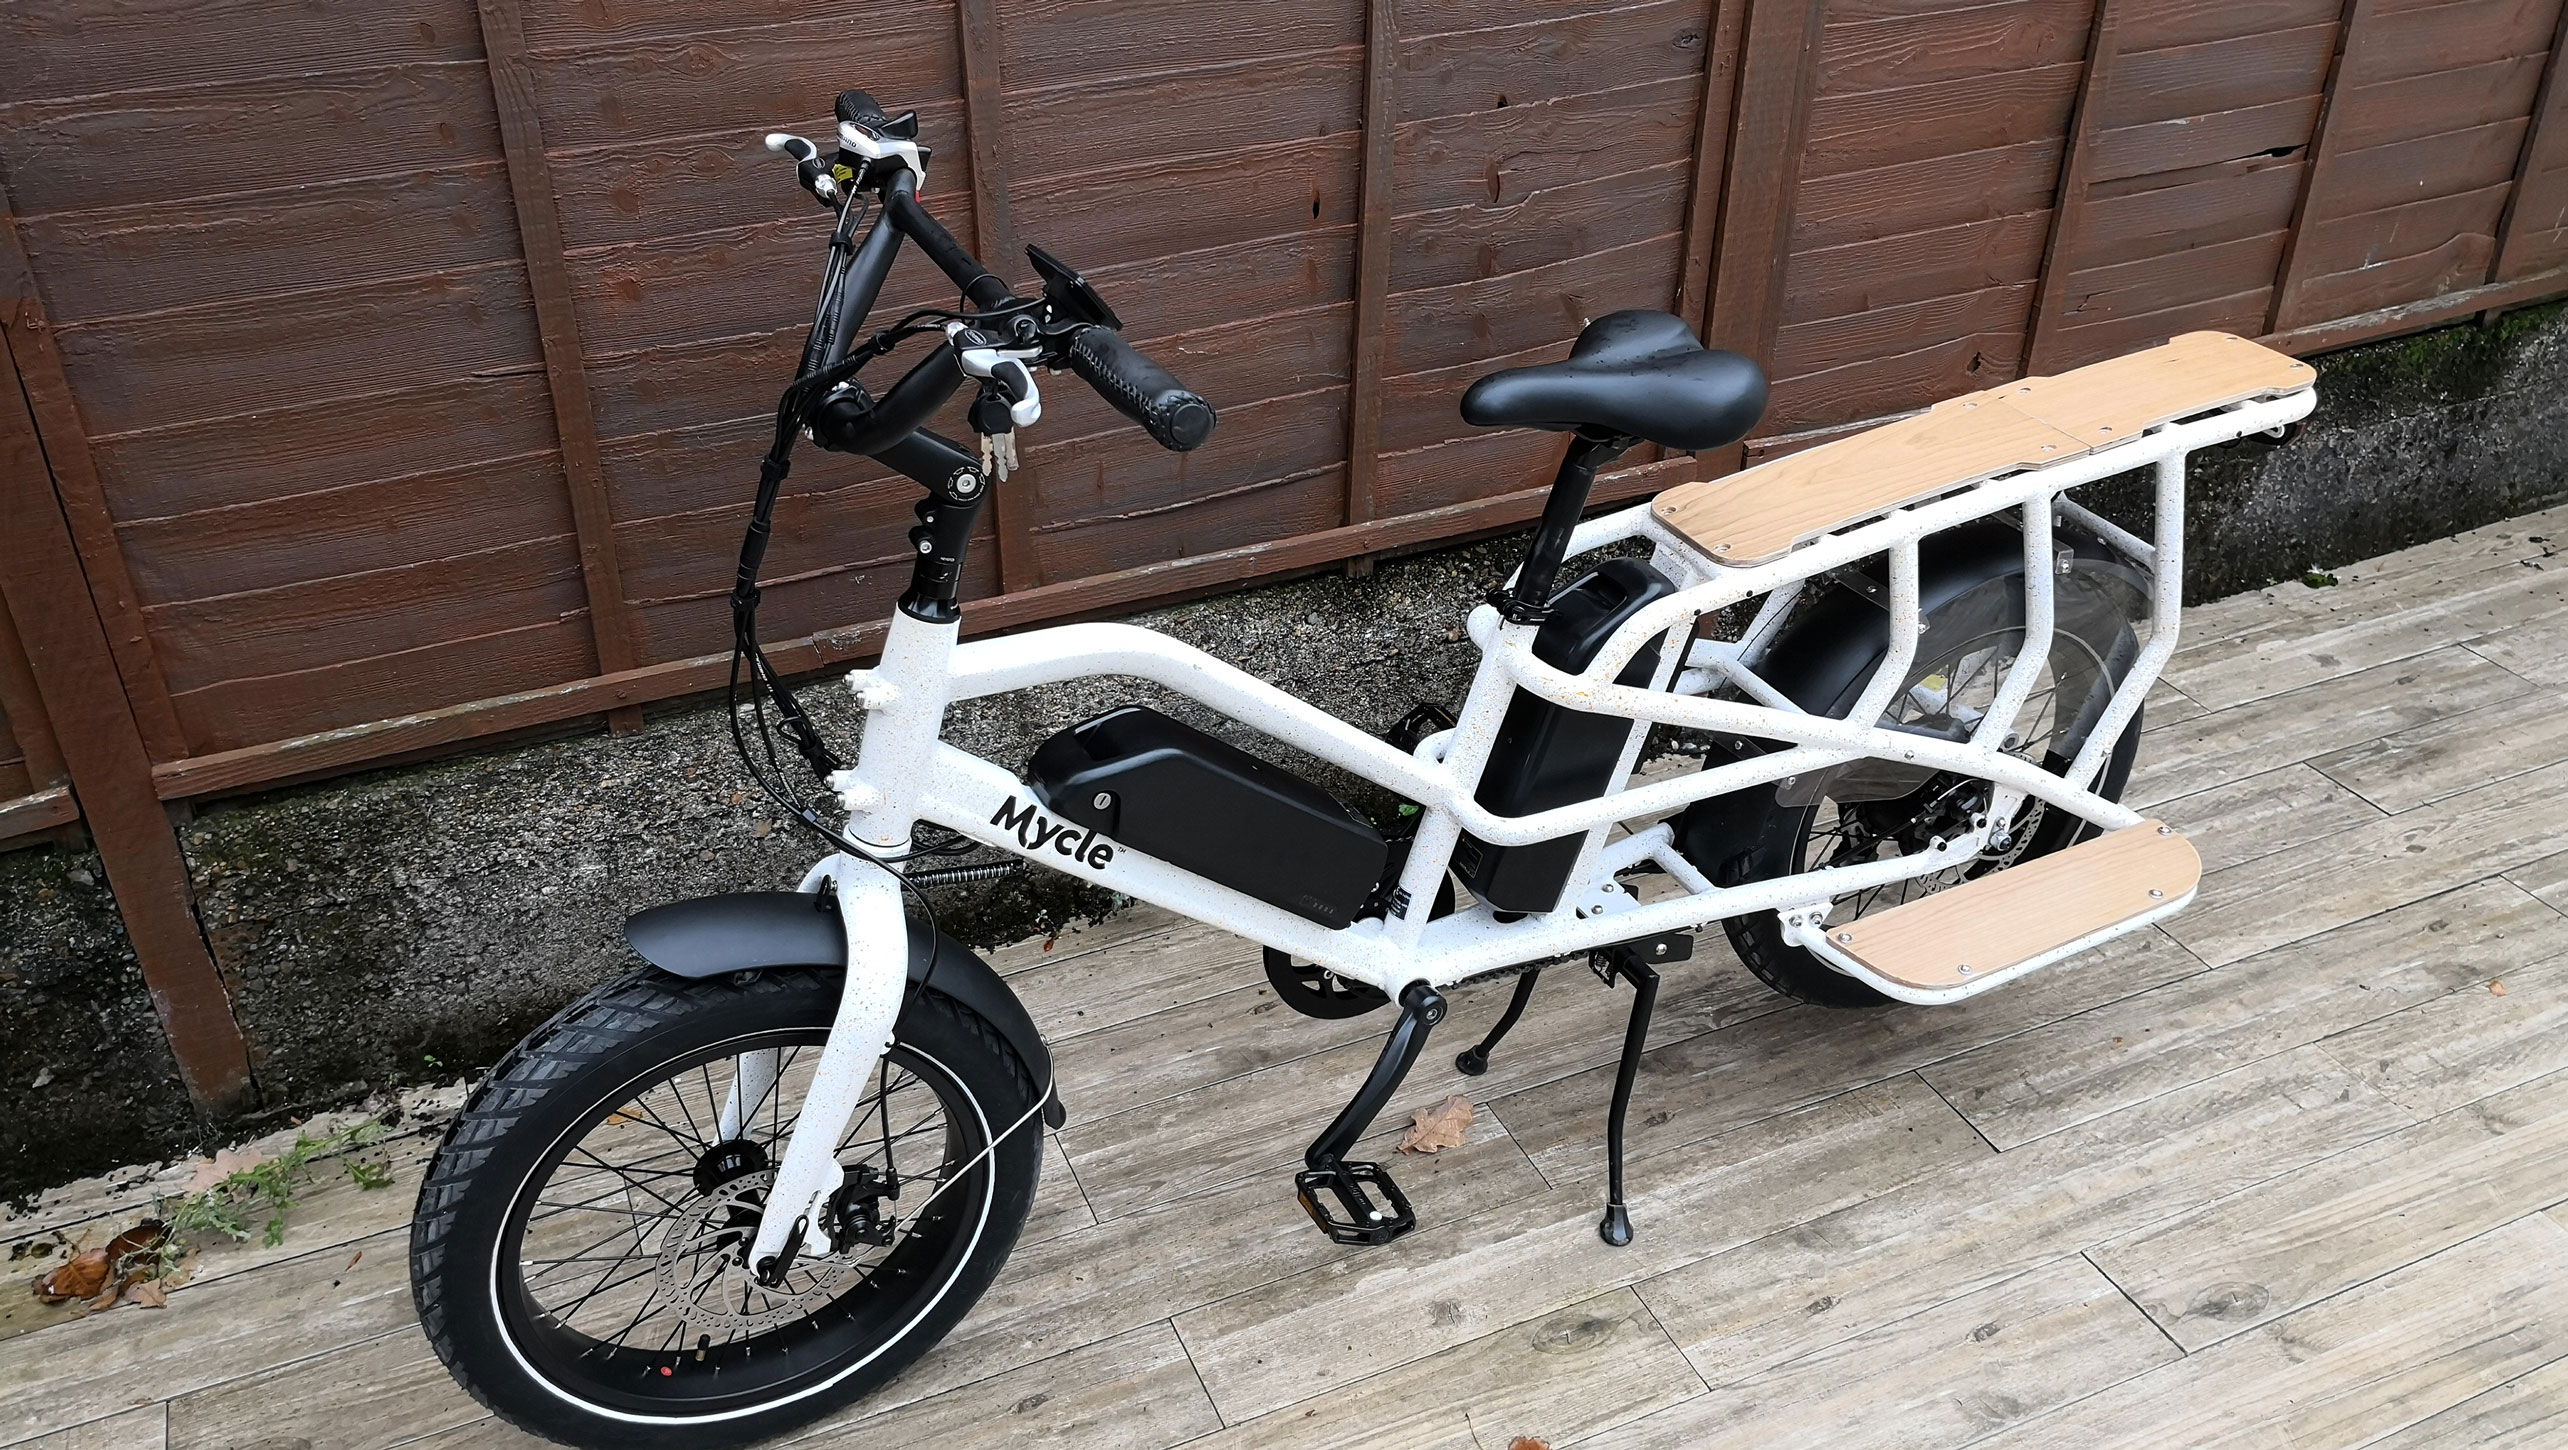 Mycle Cargo electric bike